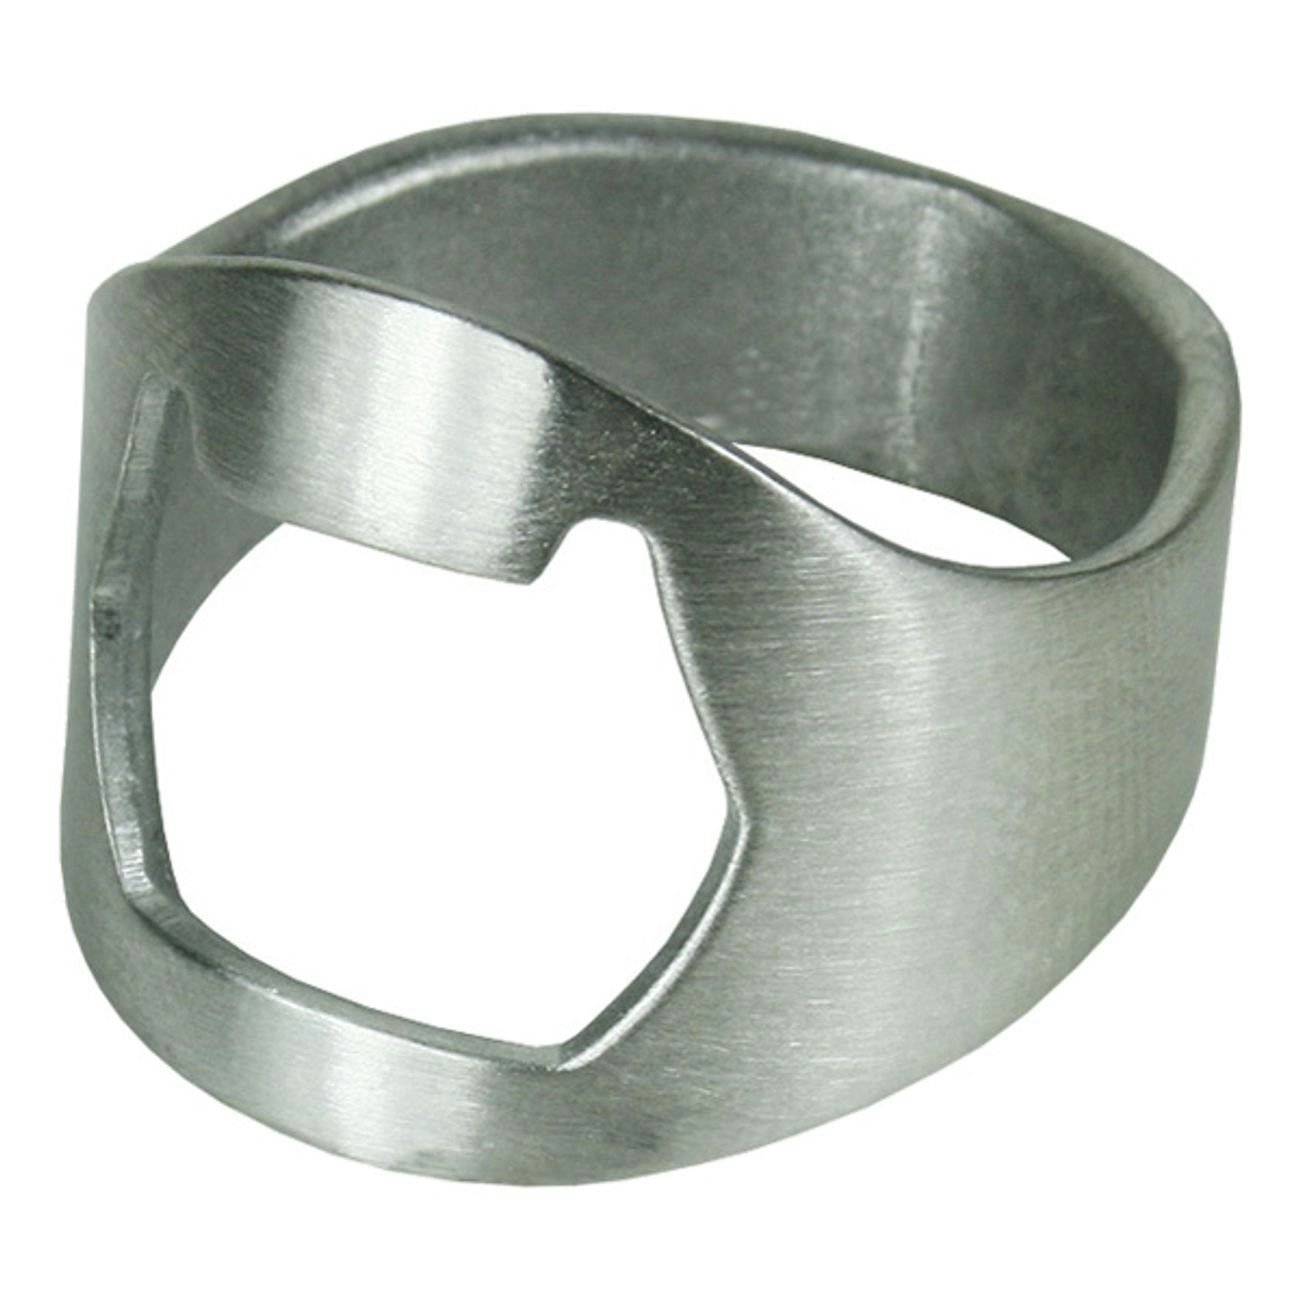 Cool Kapsylöppnare Ring (22mm)